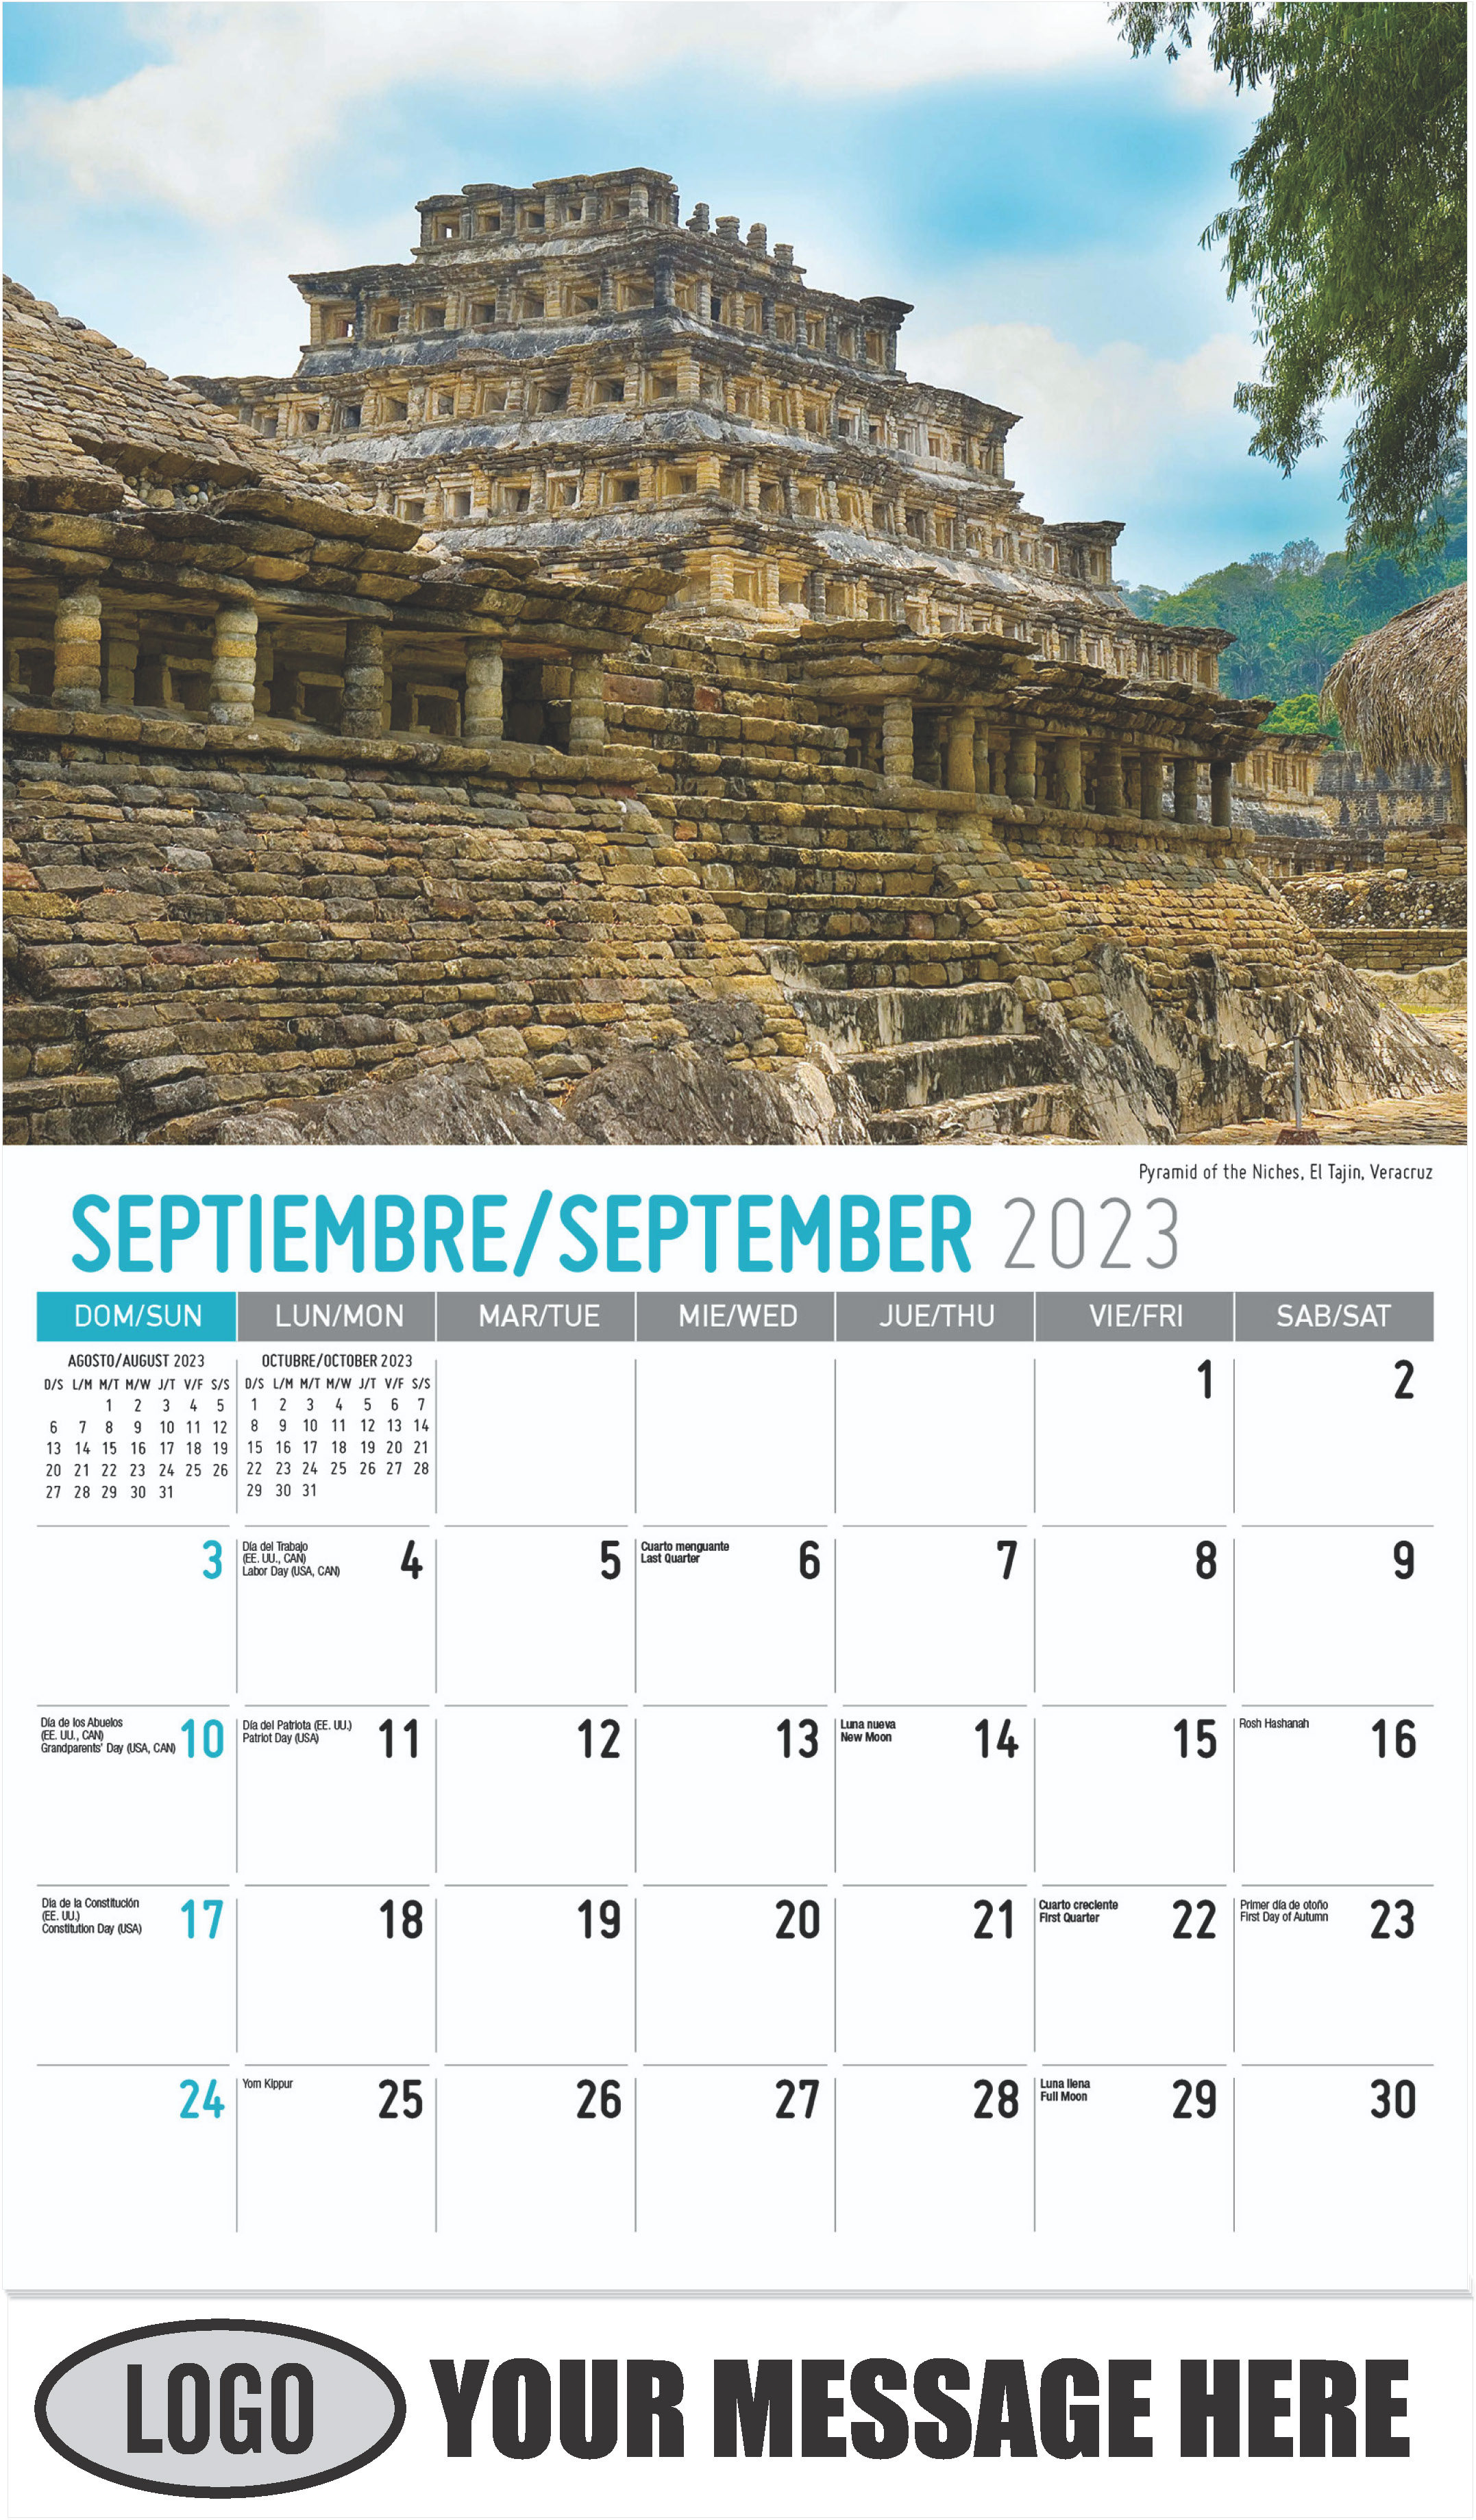 Pyramid Of The Niches, El Tajin, Veracruz - September - Scenes of Mexico (Spanish-English bilingual) 2023 Promotional Calendar